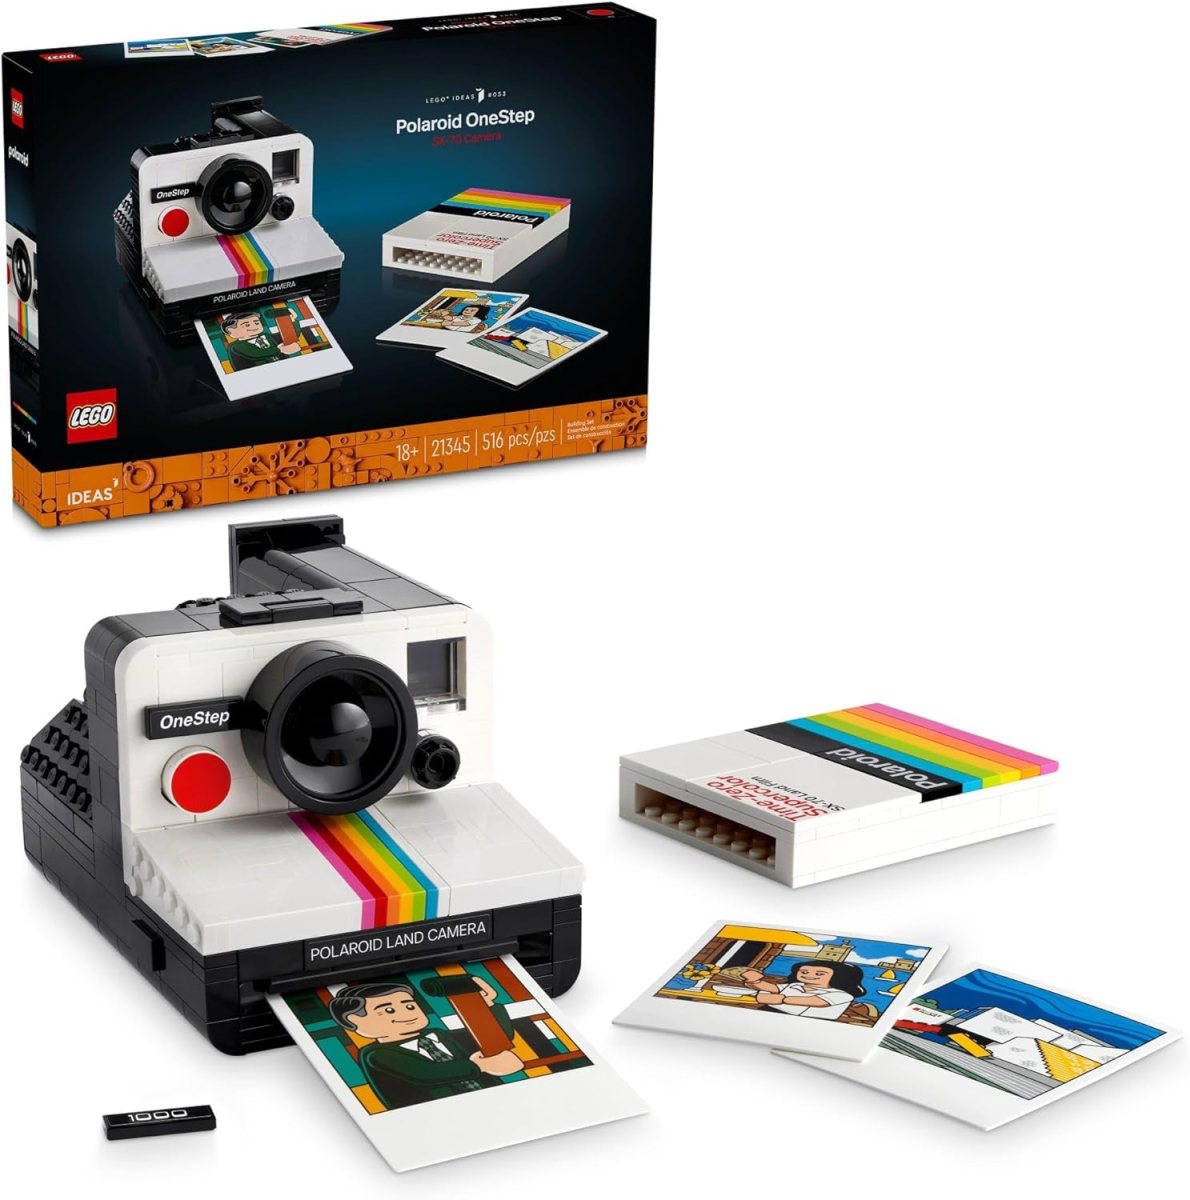 A vintage Polaroid OneStep camera made of LEGO